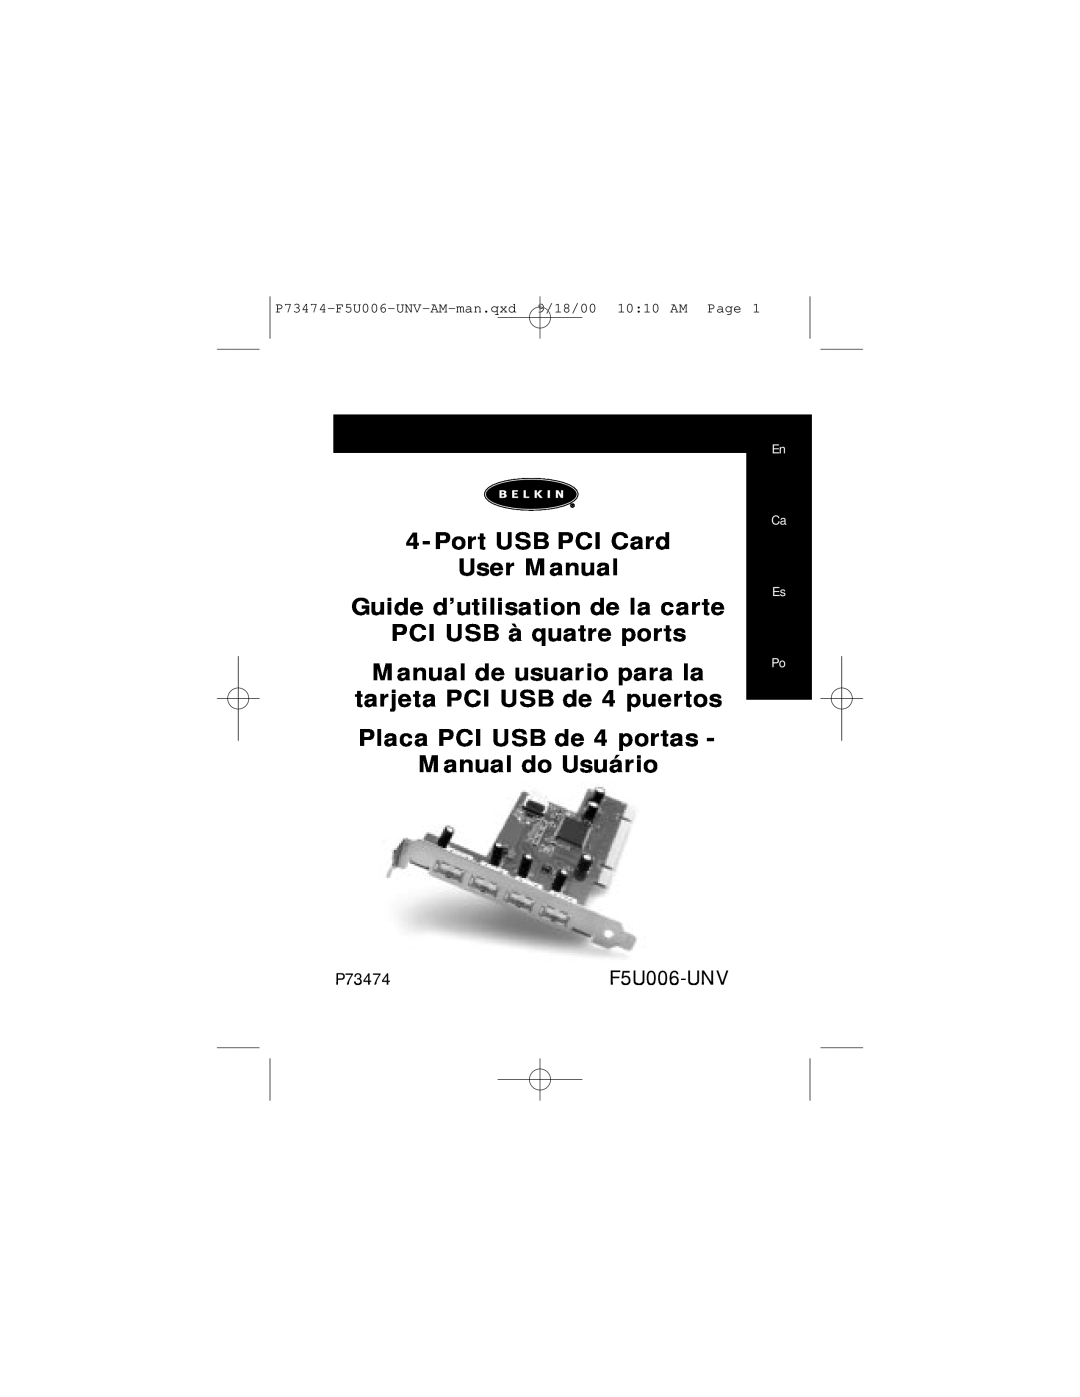 Belkin user manual P73474-F5U006-UNV-AM-man.qxd 9/18/00 1010 AM Page, PCI USB à quatre ports, P73474F5U006-UNV 